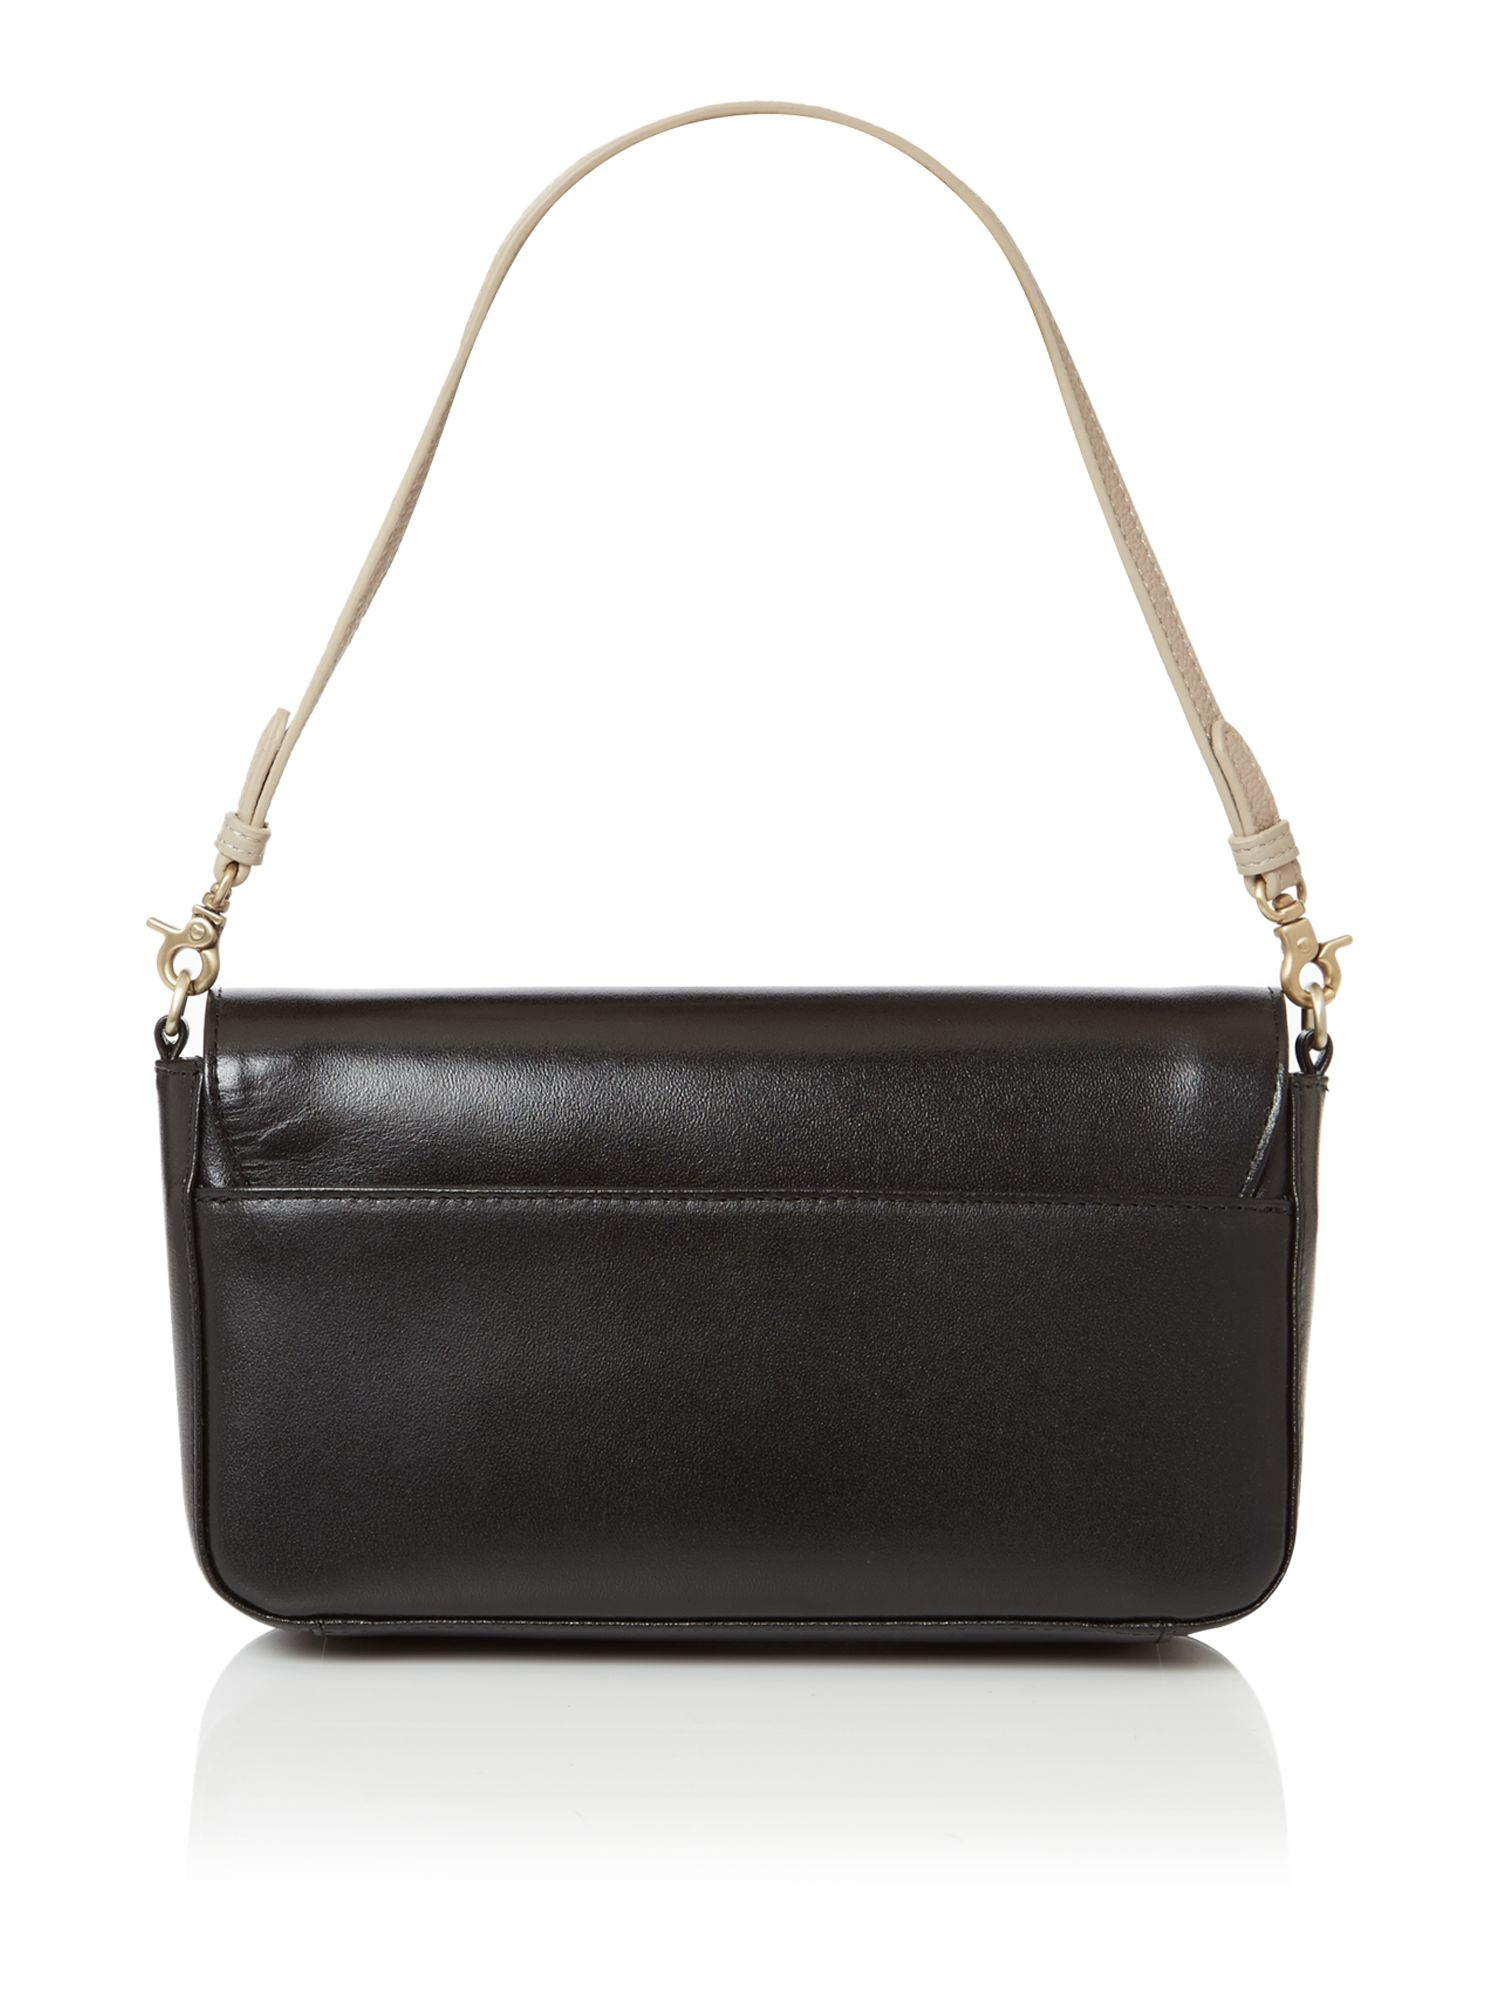 Lyst - Radley Hepburn Small Black Flapover Shoulder Bag in Black